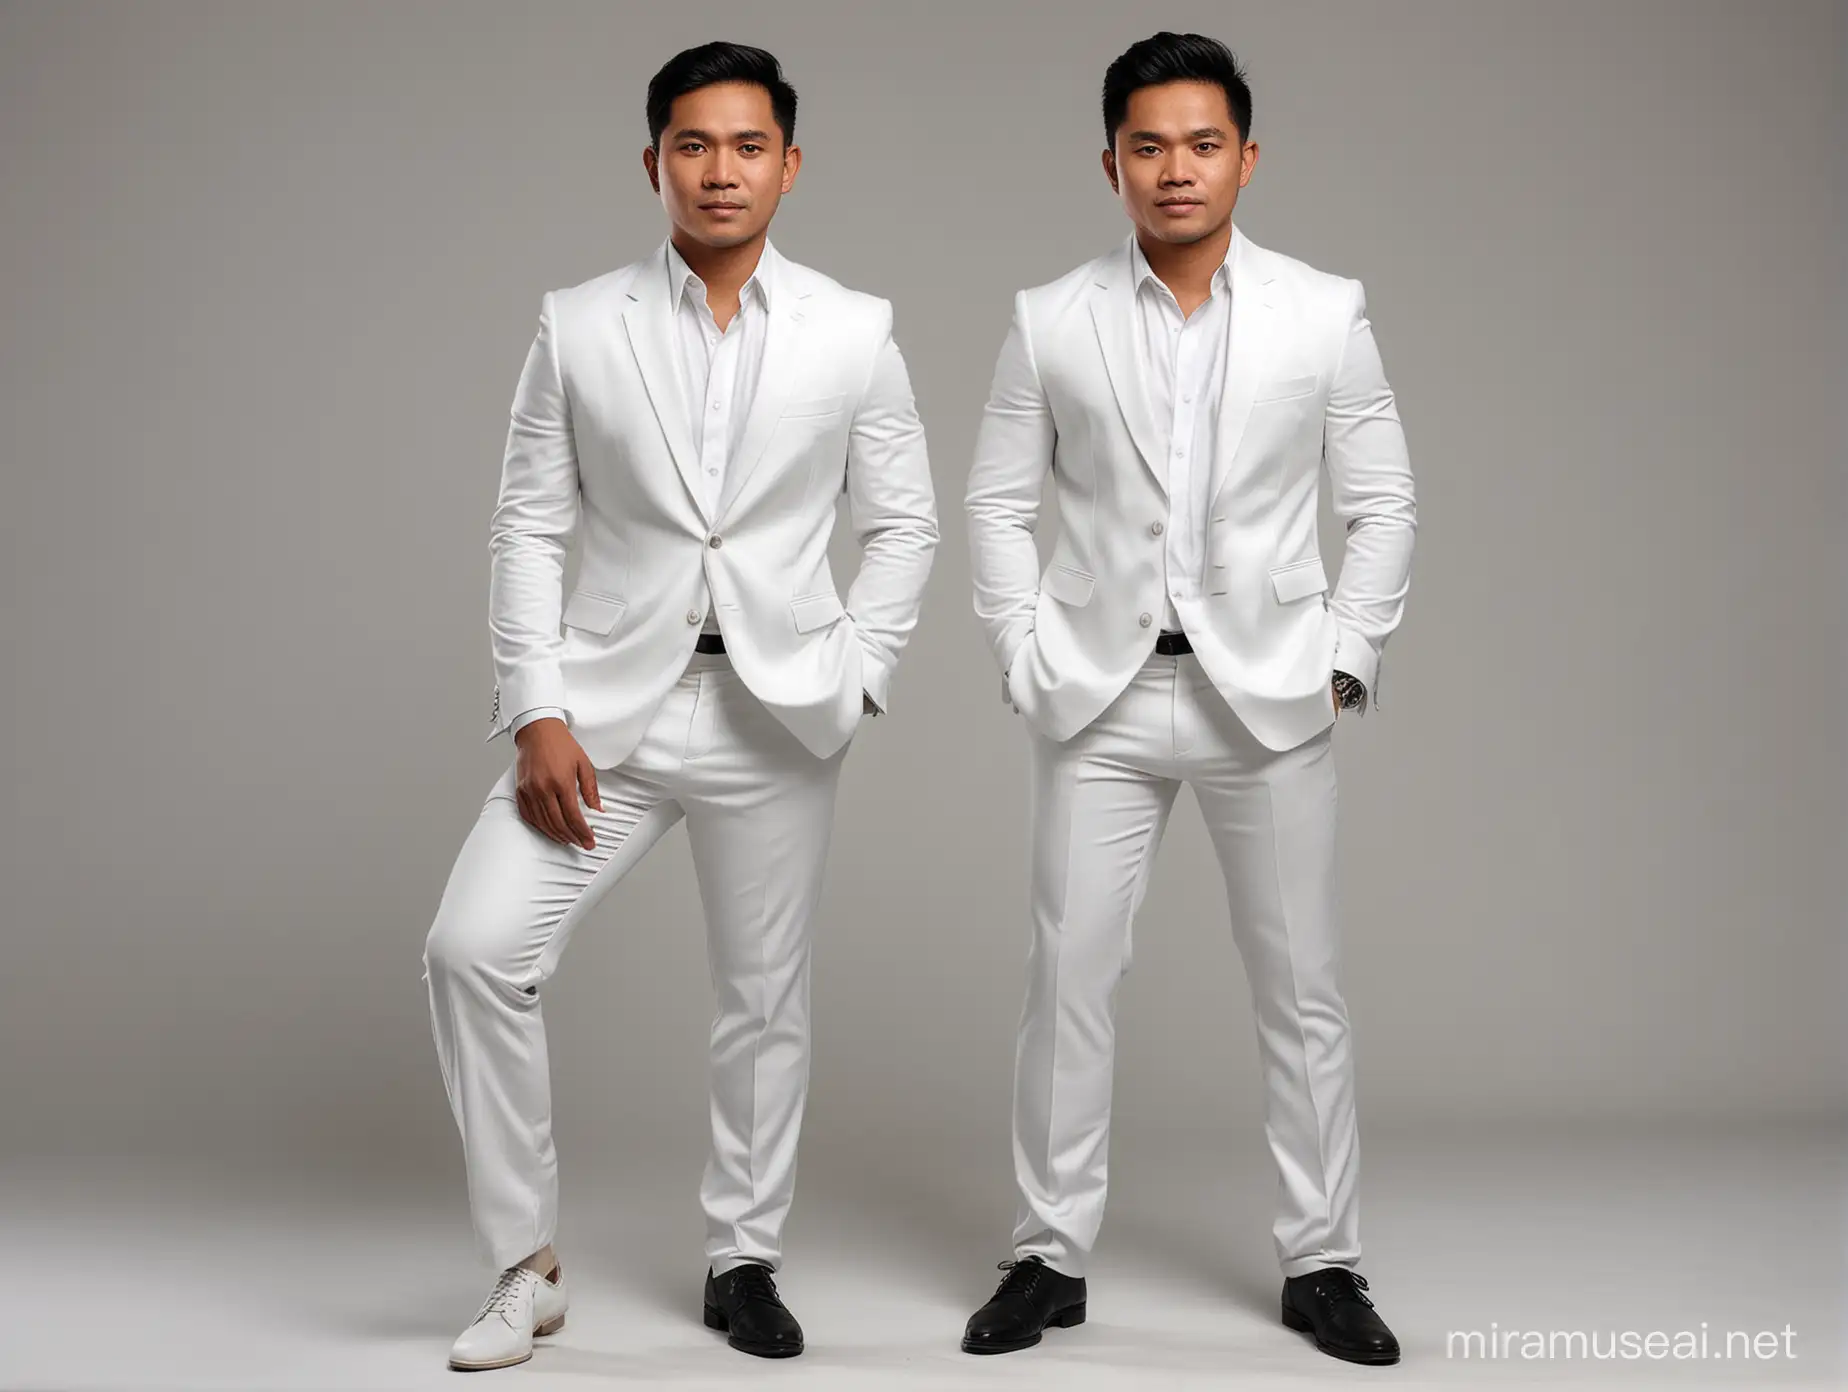 Two Indonesian Men in Formal Attire in a Studio Setting